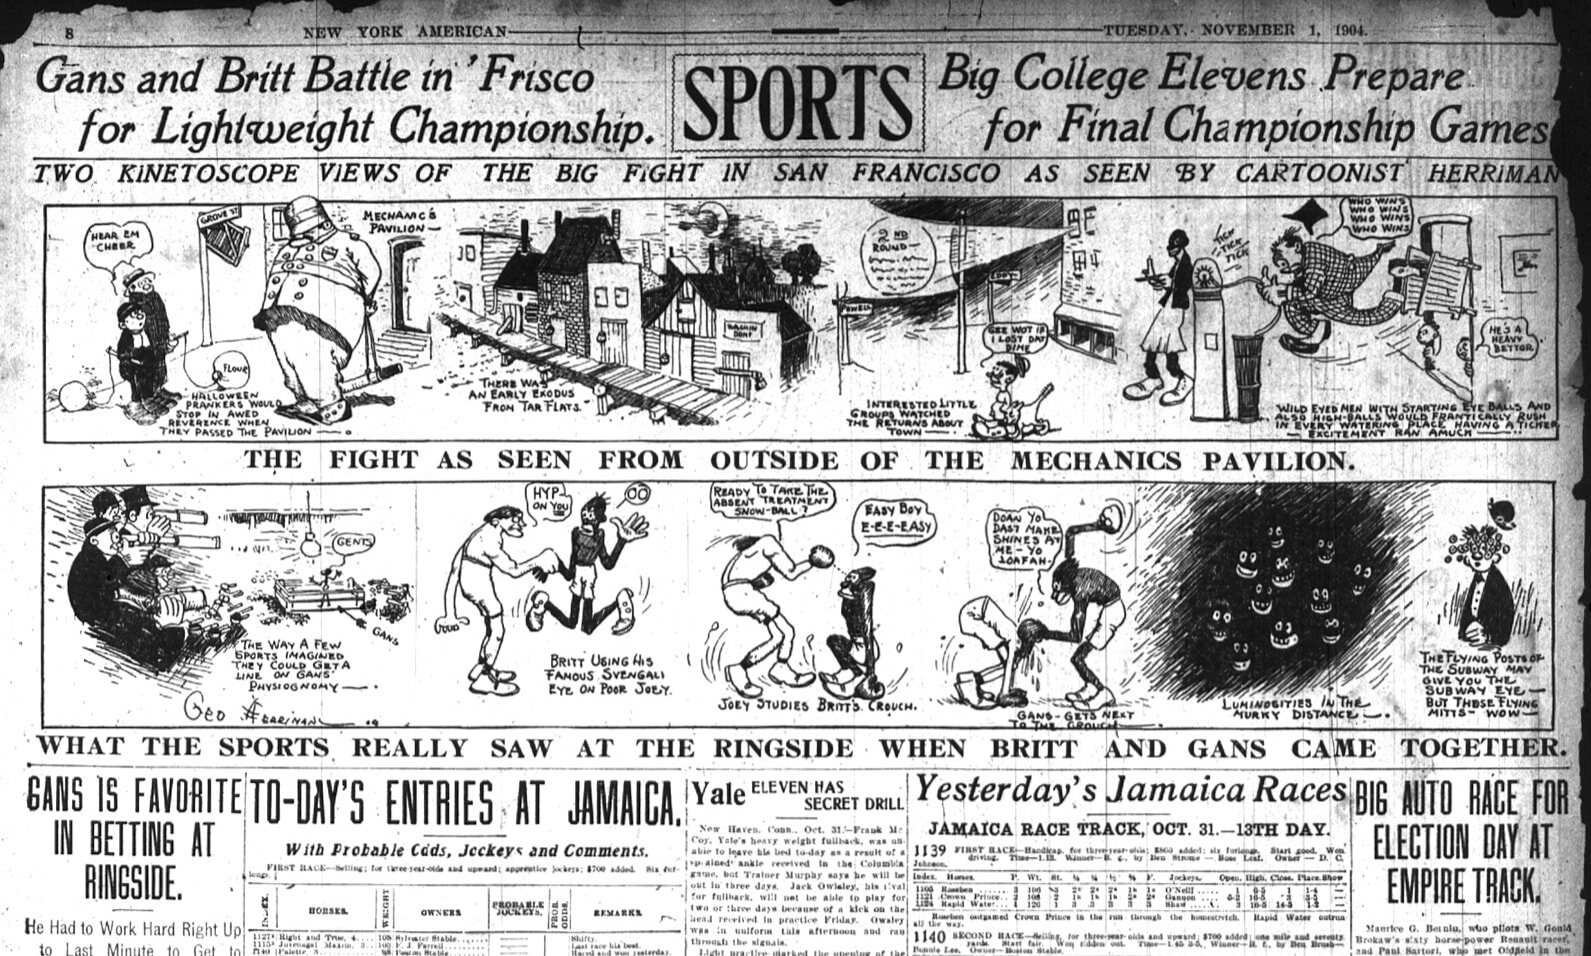 07-1904-11-01-nya-herriman-sports-cartoon.jpg